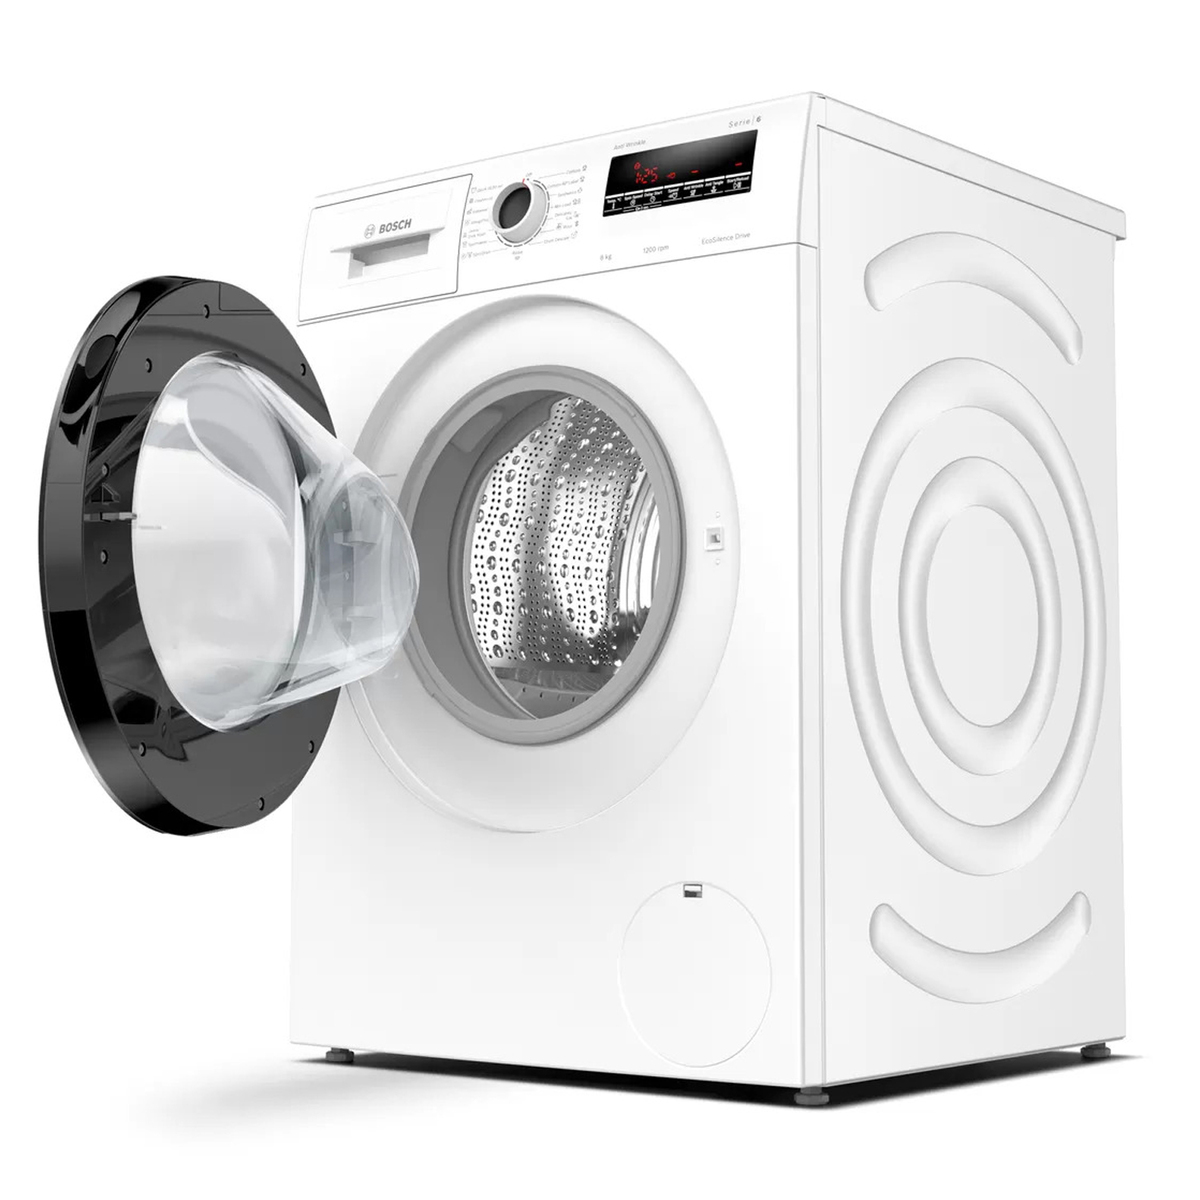 Bosch  WAJ24267IN Front Load Washing Machine White 8kg